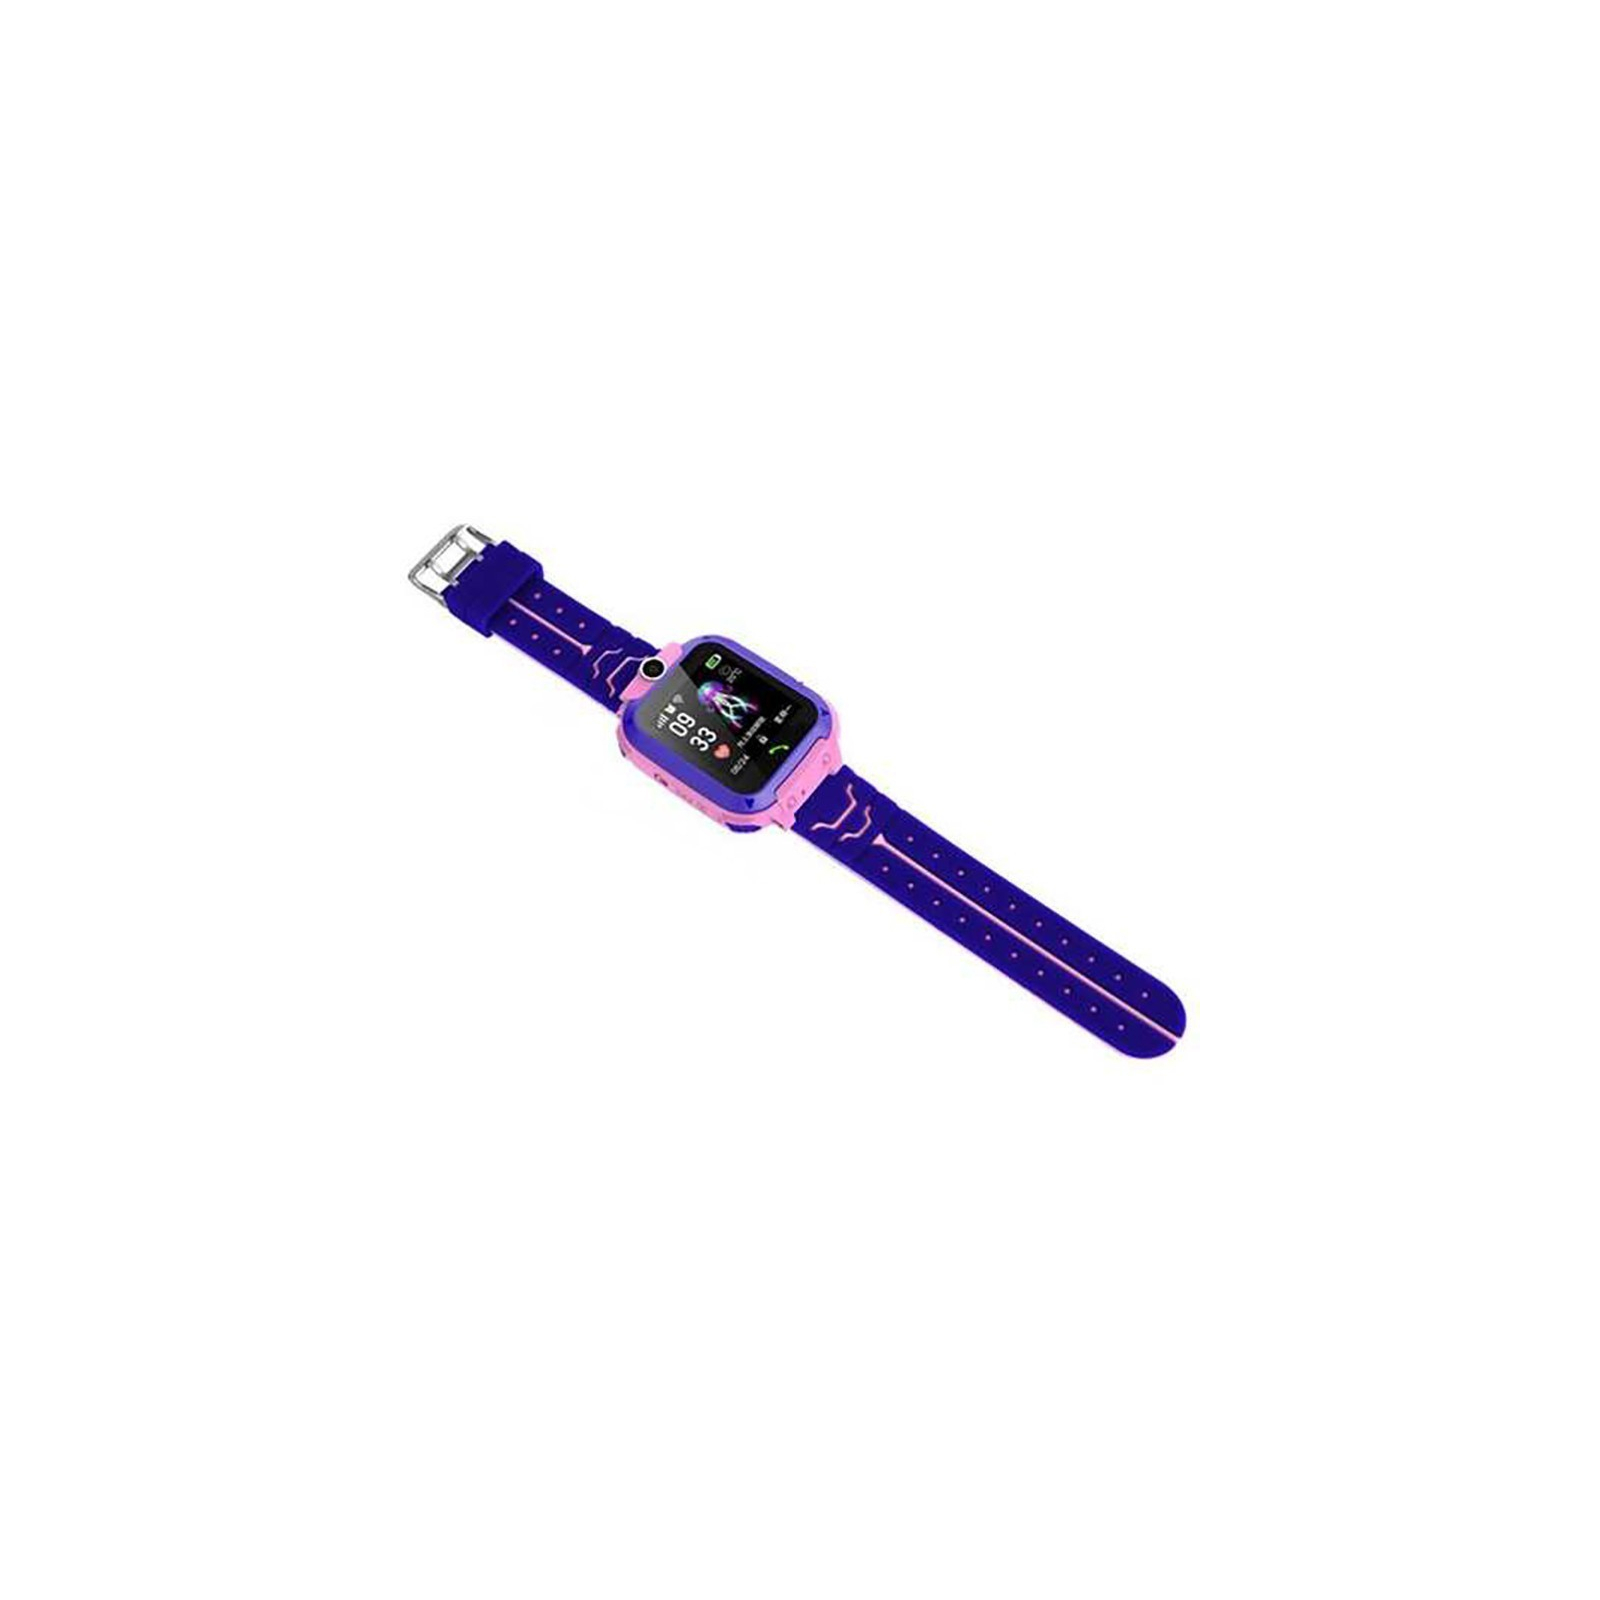 Смарт-часы UWatch Q12 Kid smart watch Blue (F_100006) изображение 3